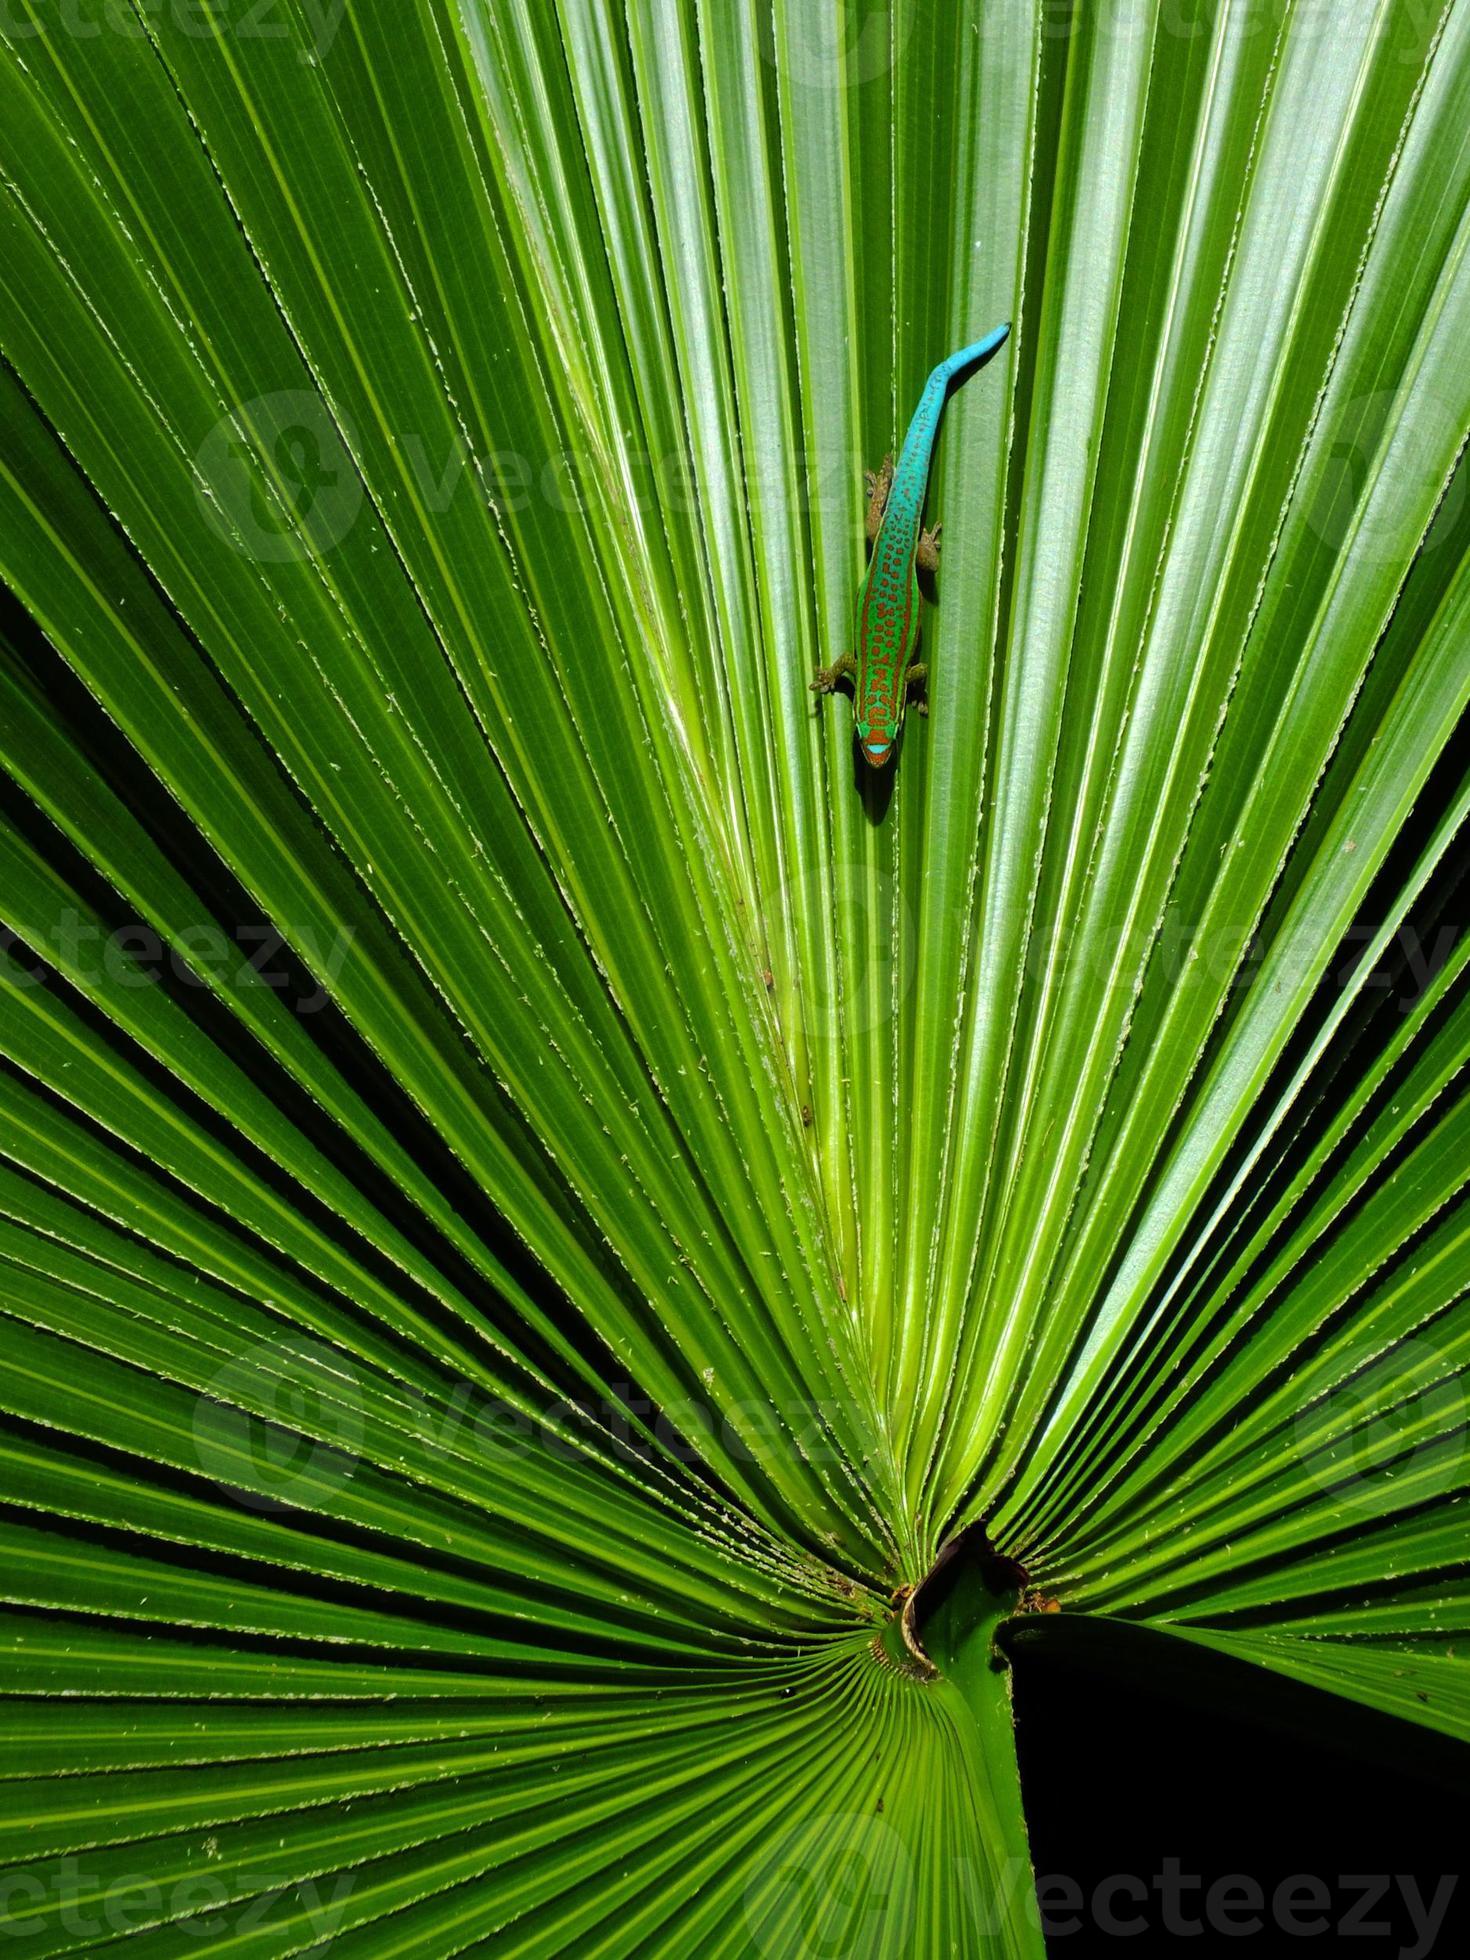 gekko op palmblad foto